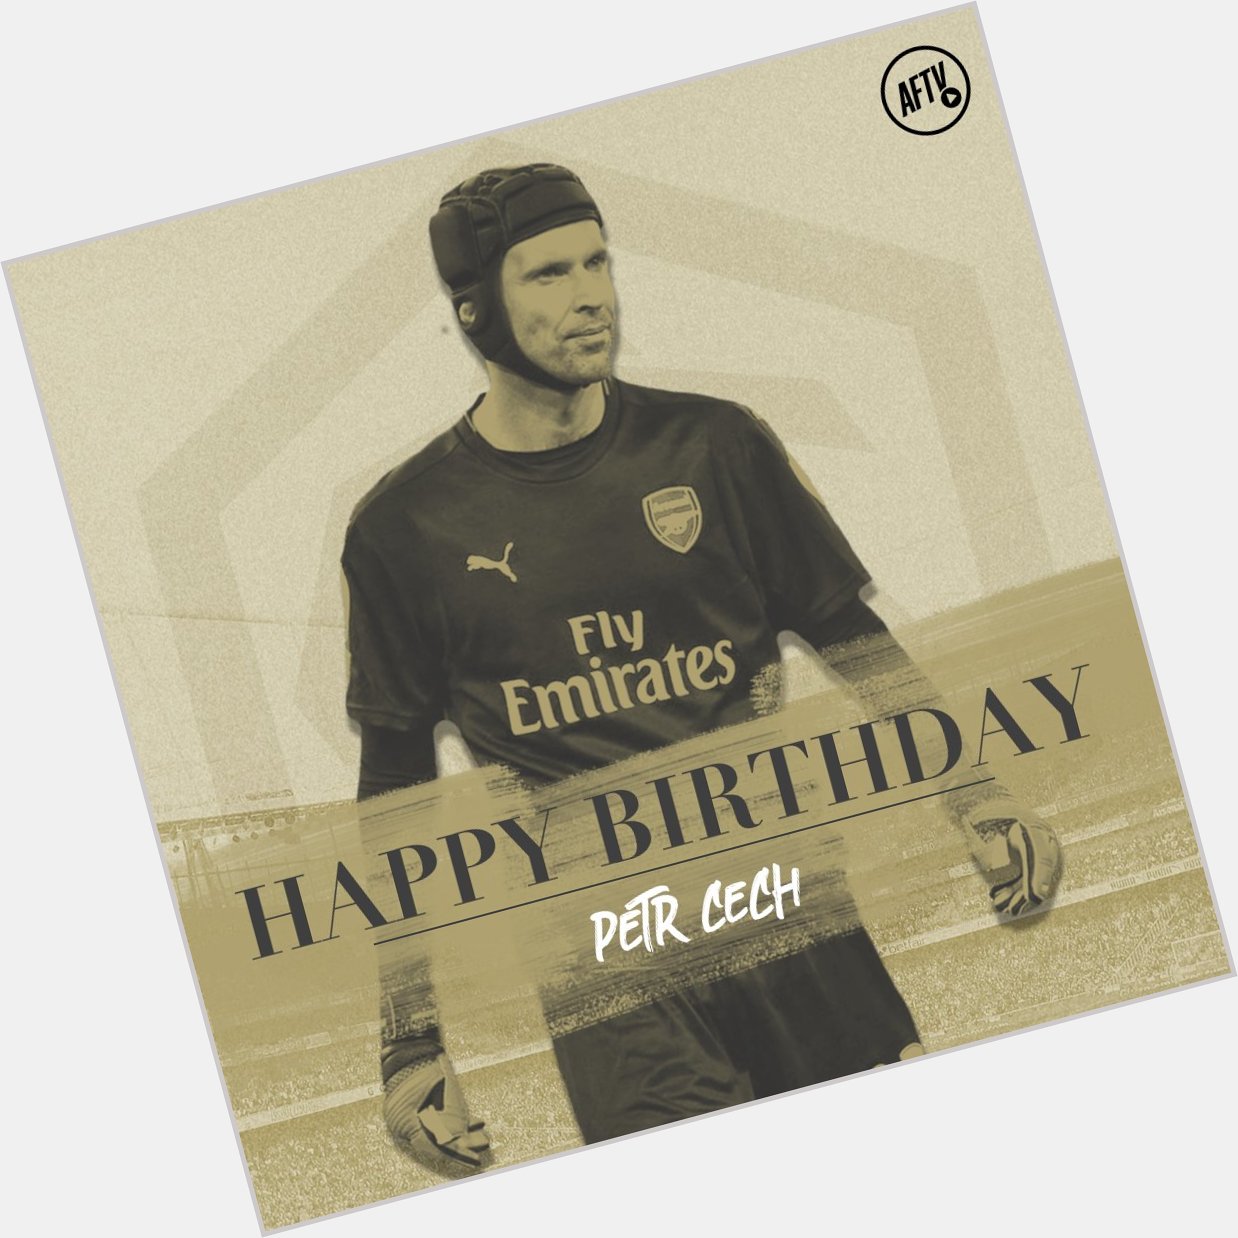 Happy Birthday Petr Cech.    